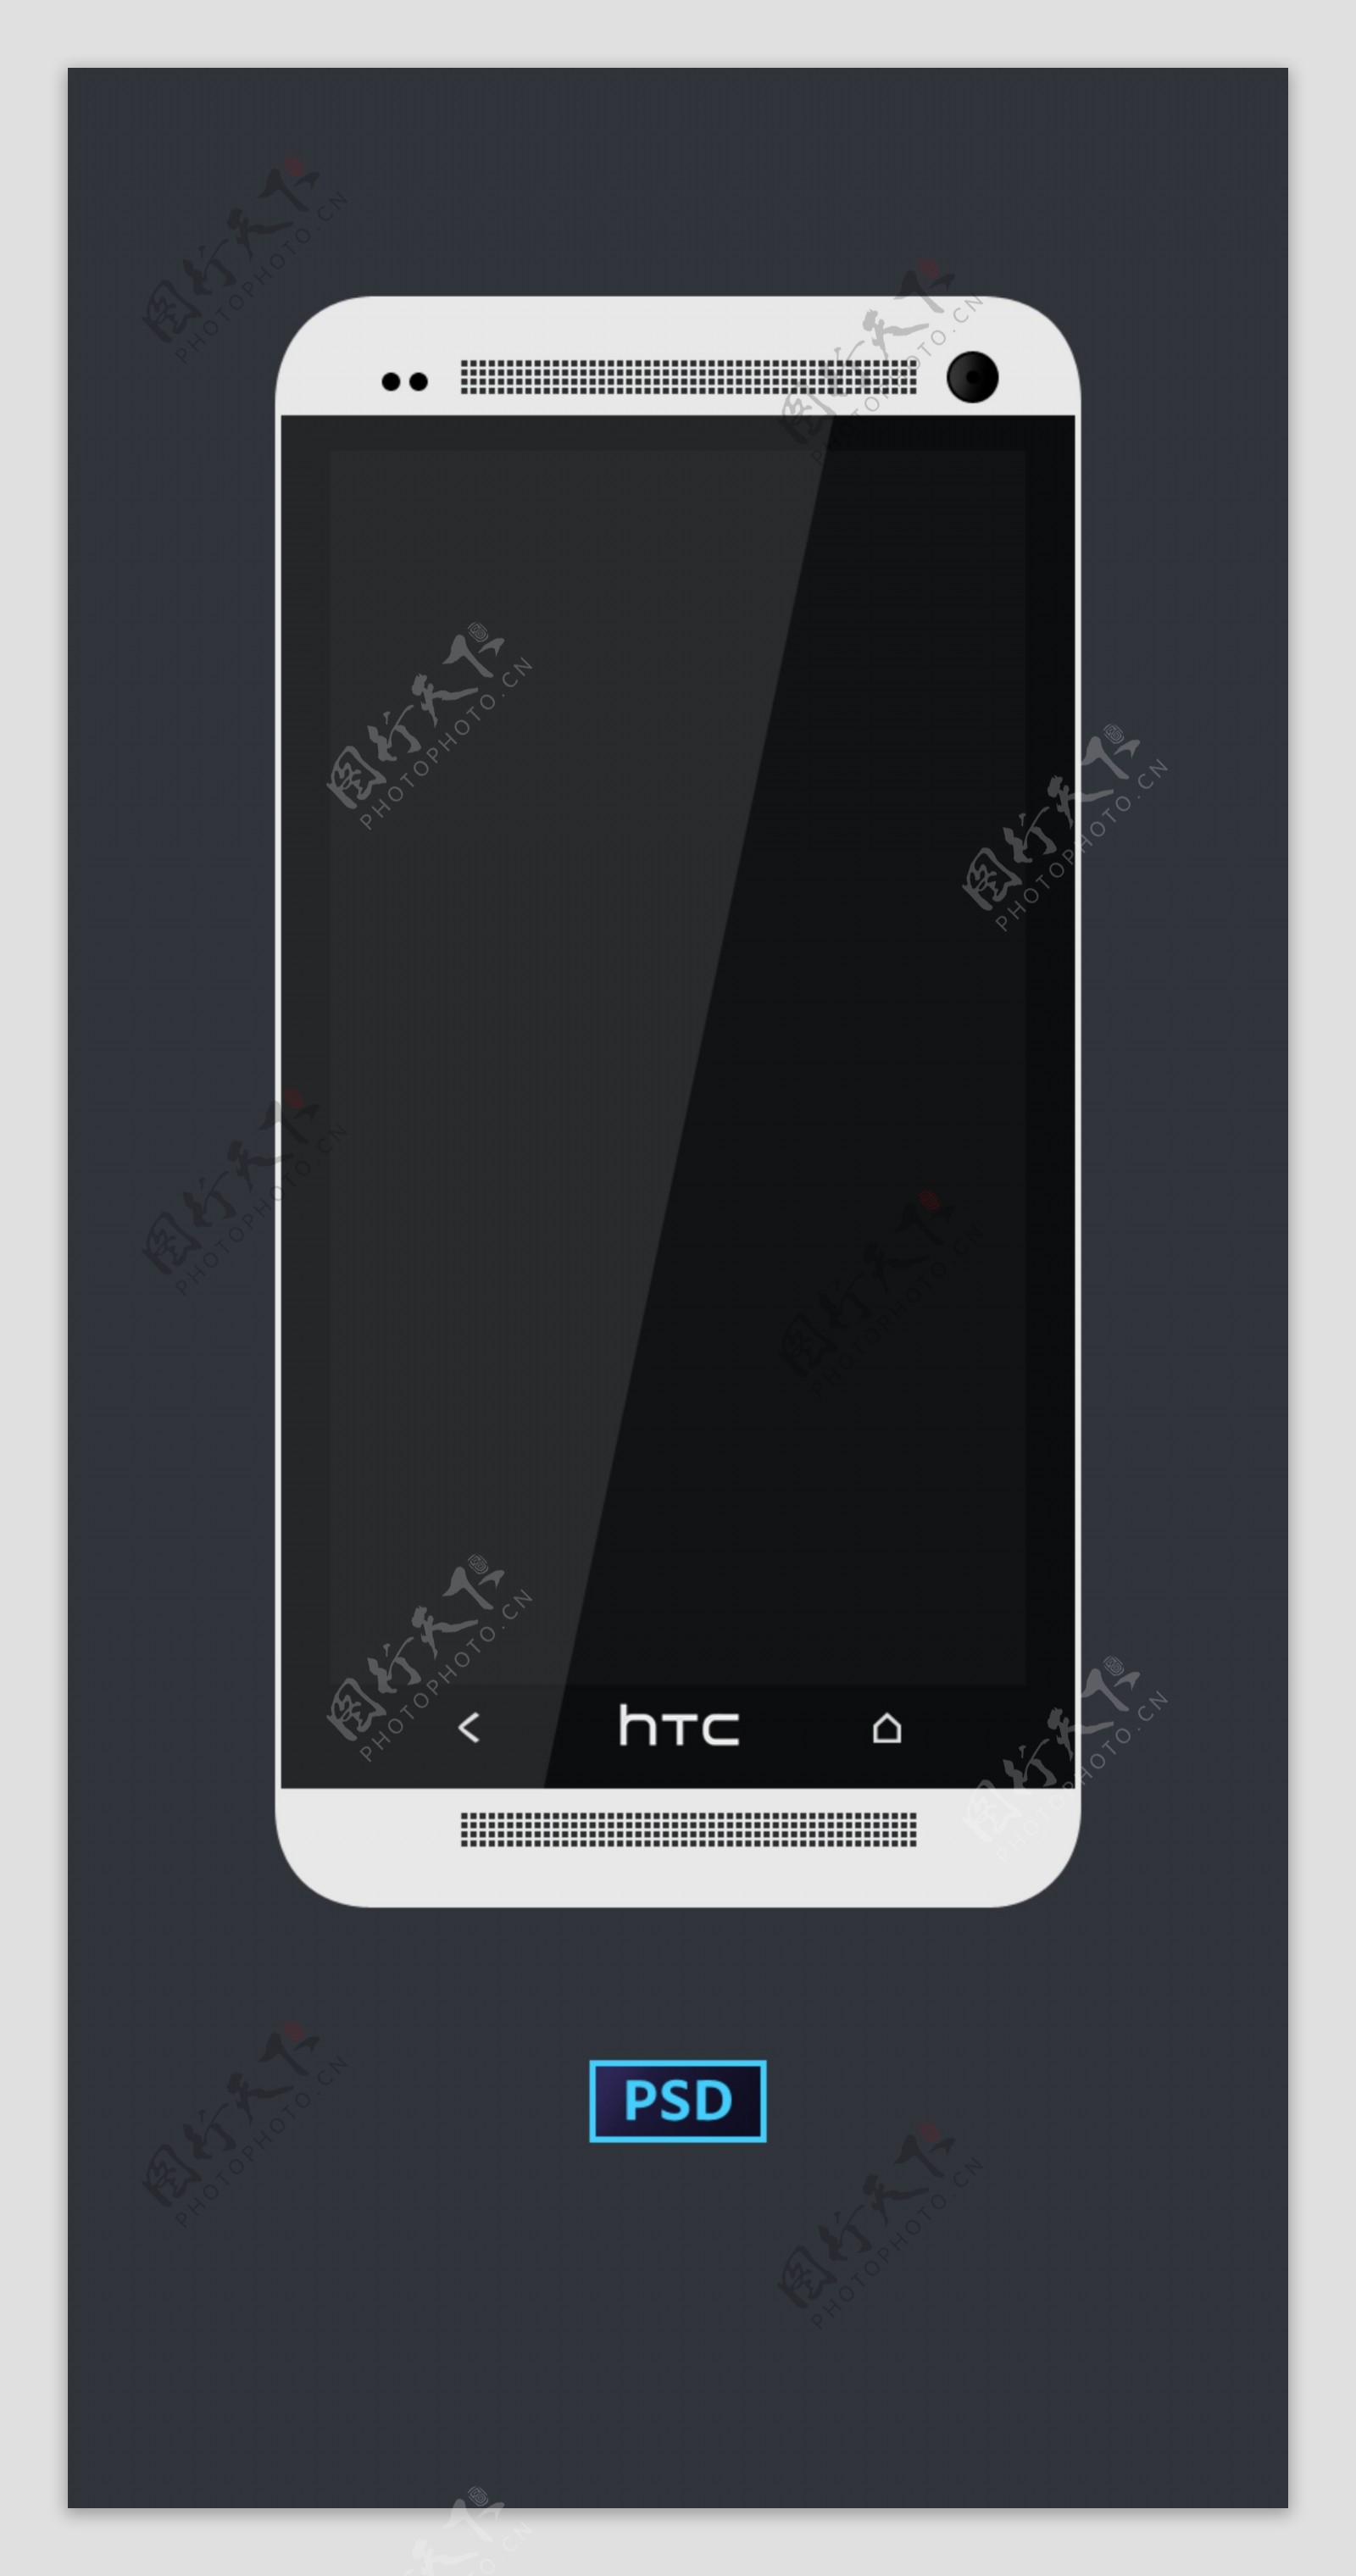 HTC白色智能手机模型PSD分层素材